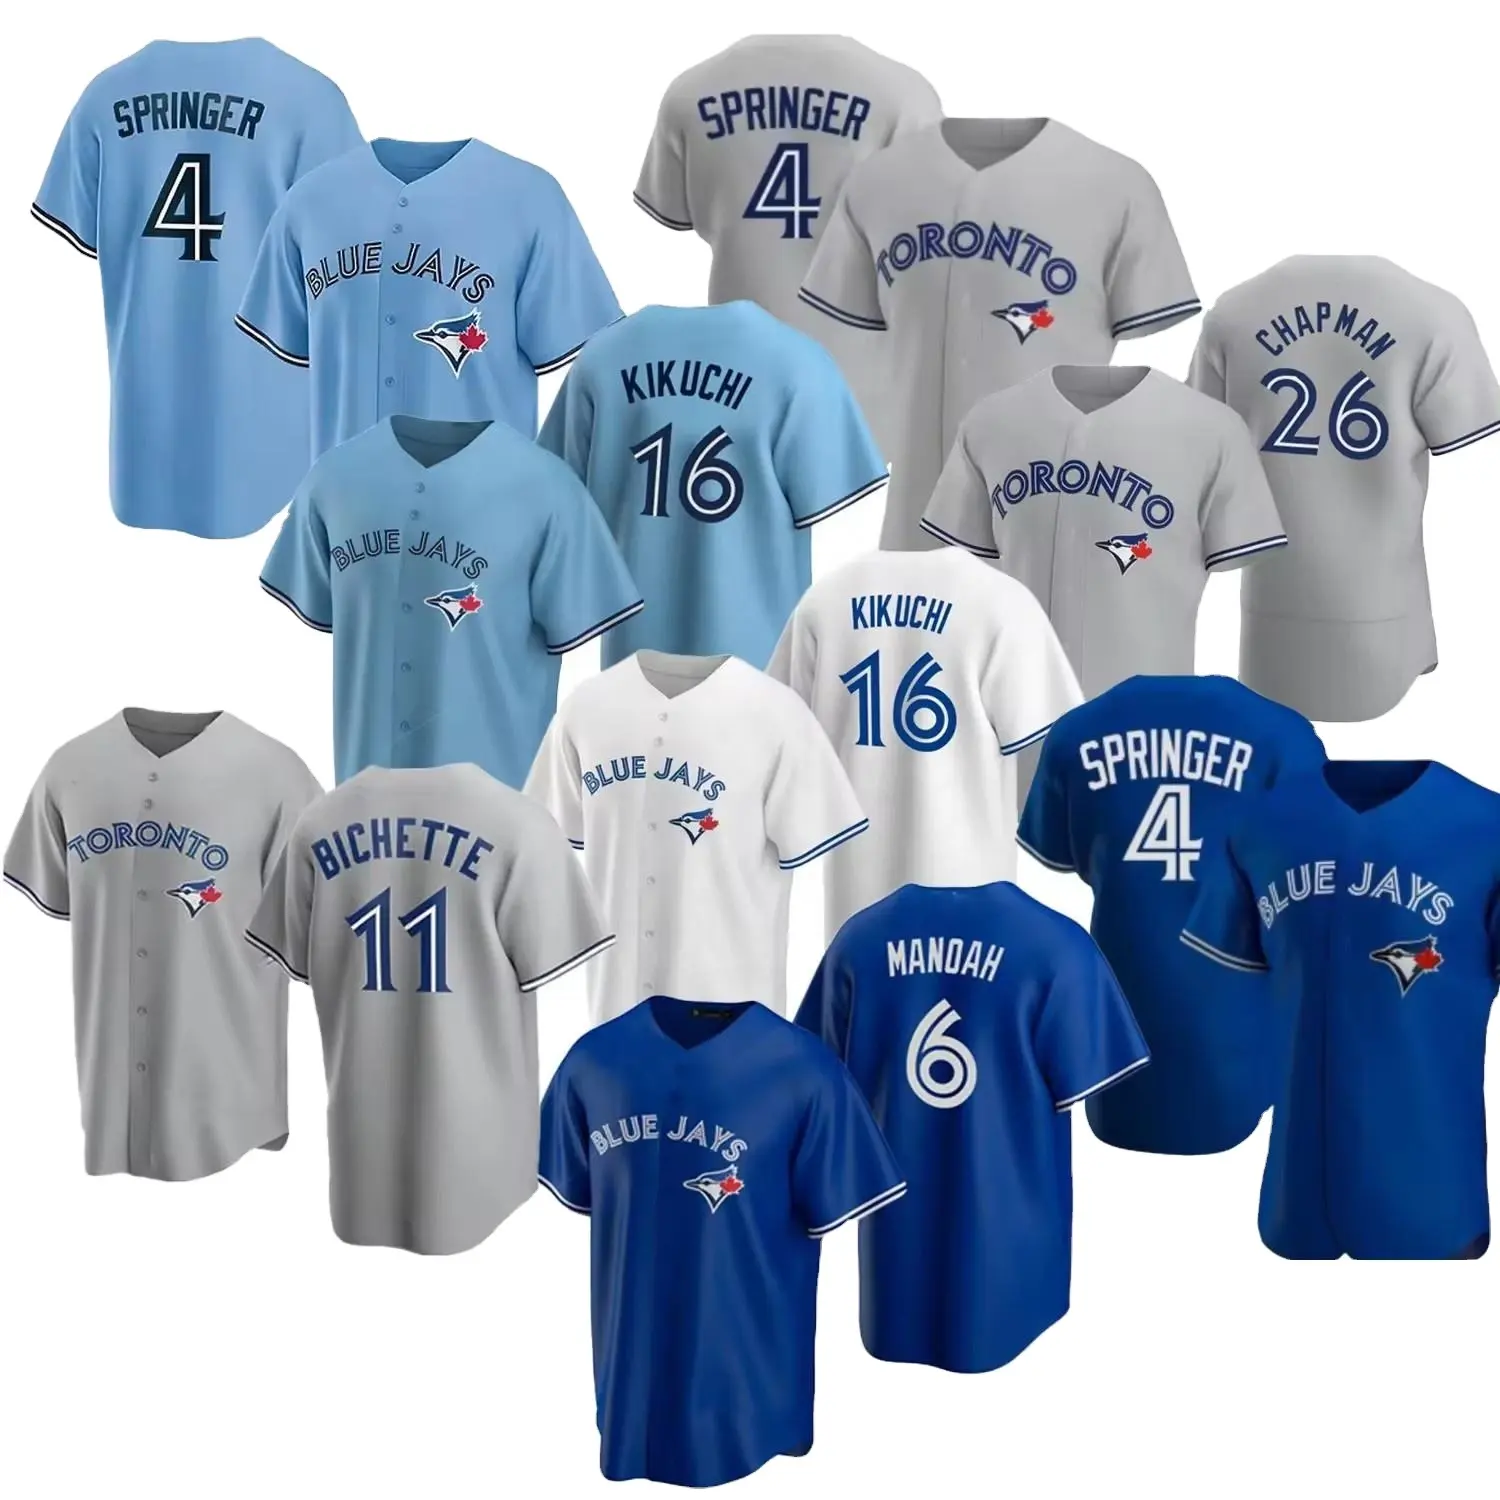 Wholesale MLBing Jersey with logo sublimated mesh baseball jersey training softball set custom design